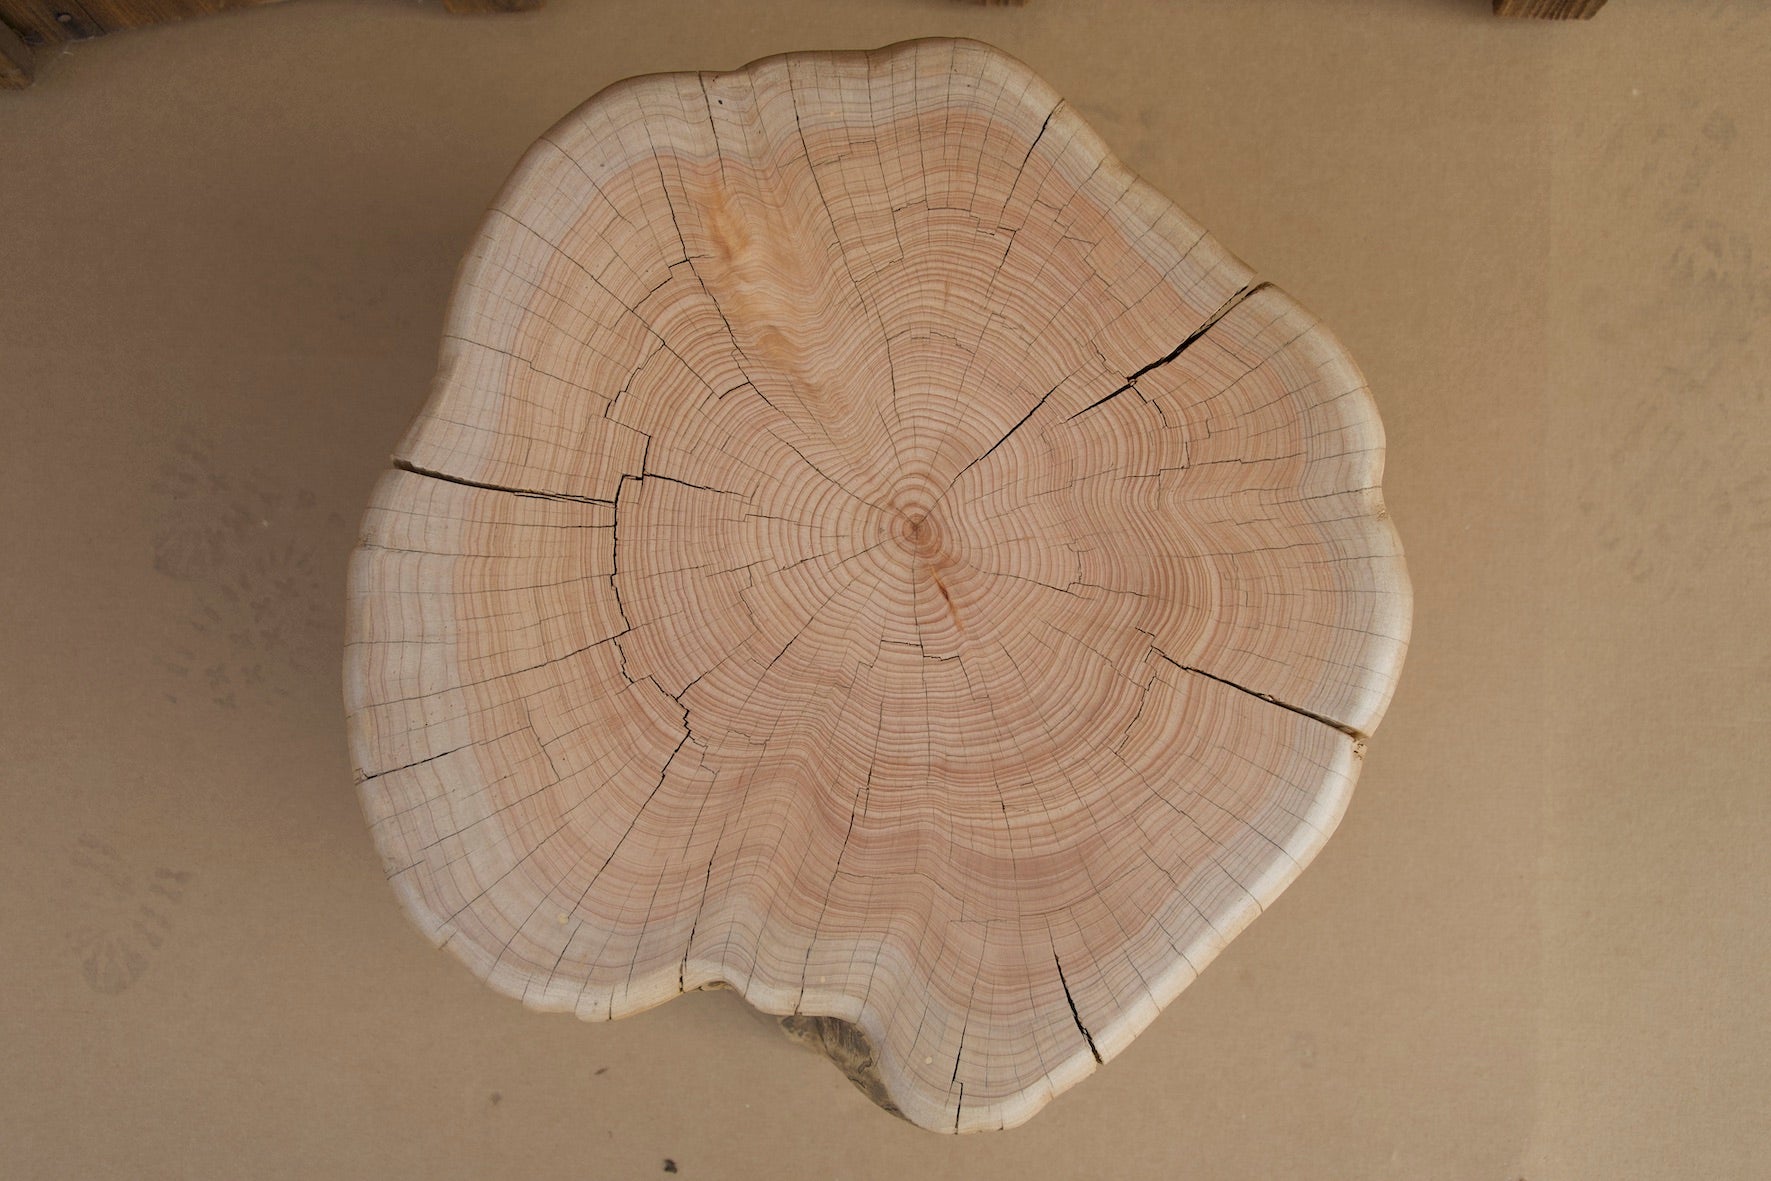 Monterey Cypress Wood Stool #143143